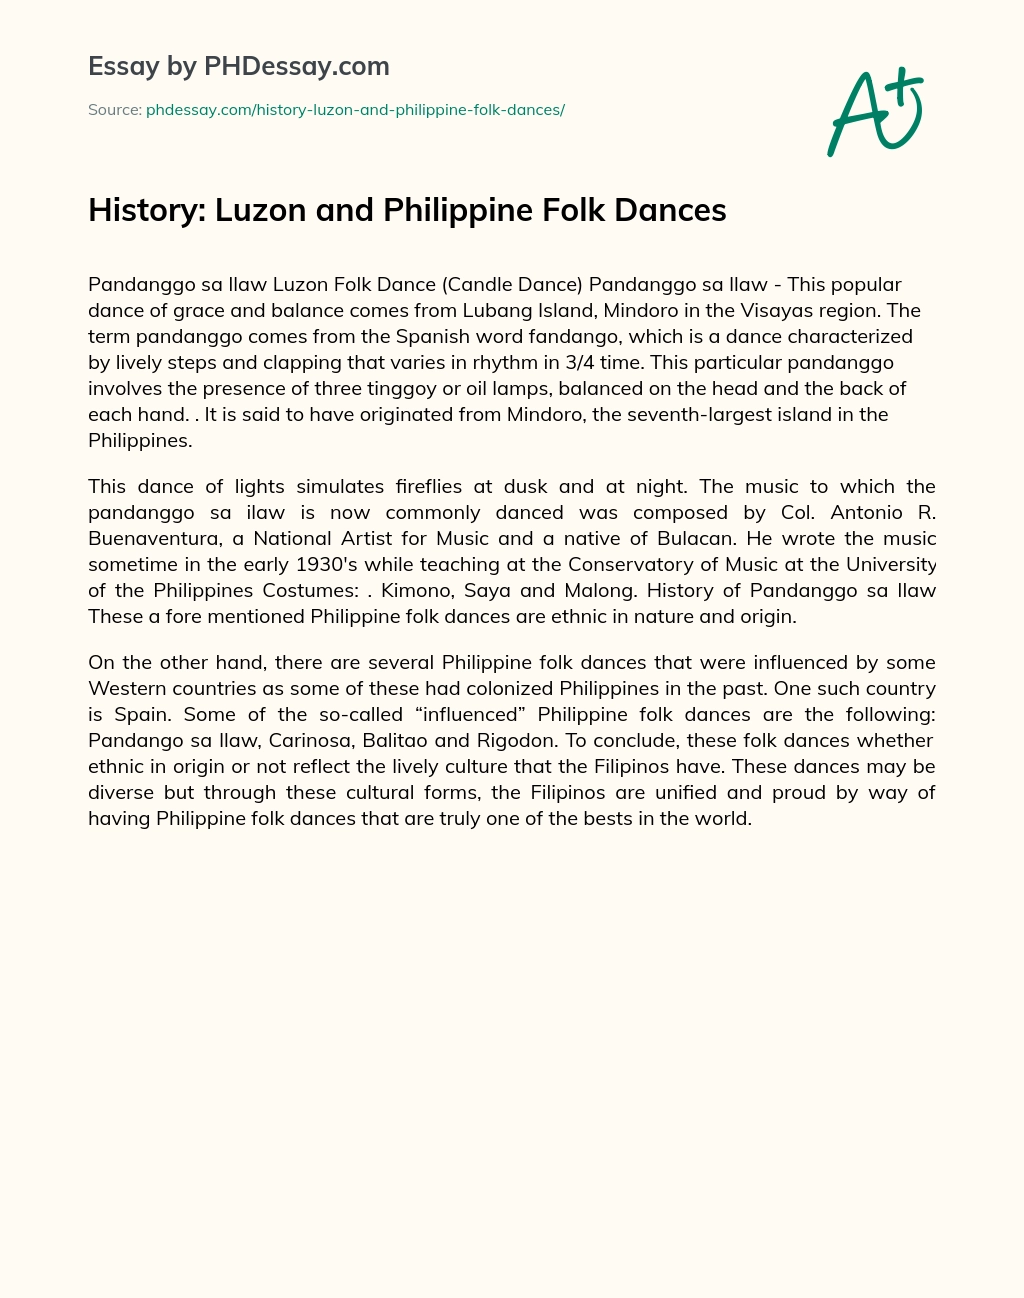 History: Luzon and Philippine Folk Dances essay